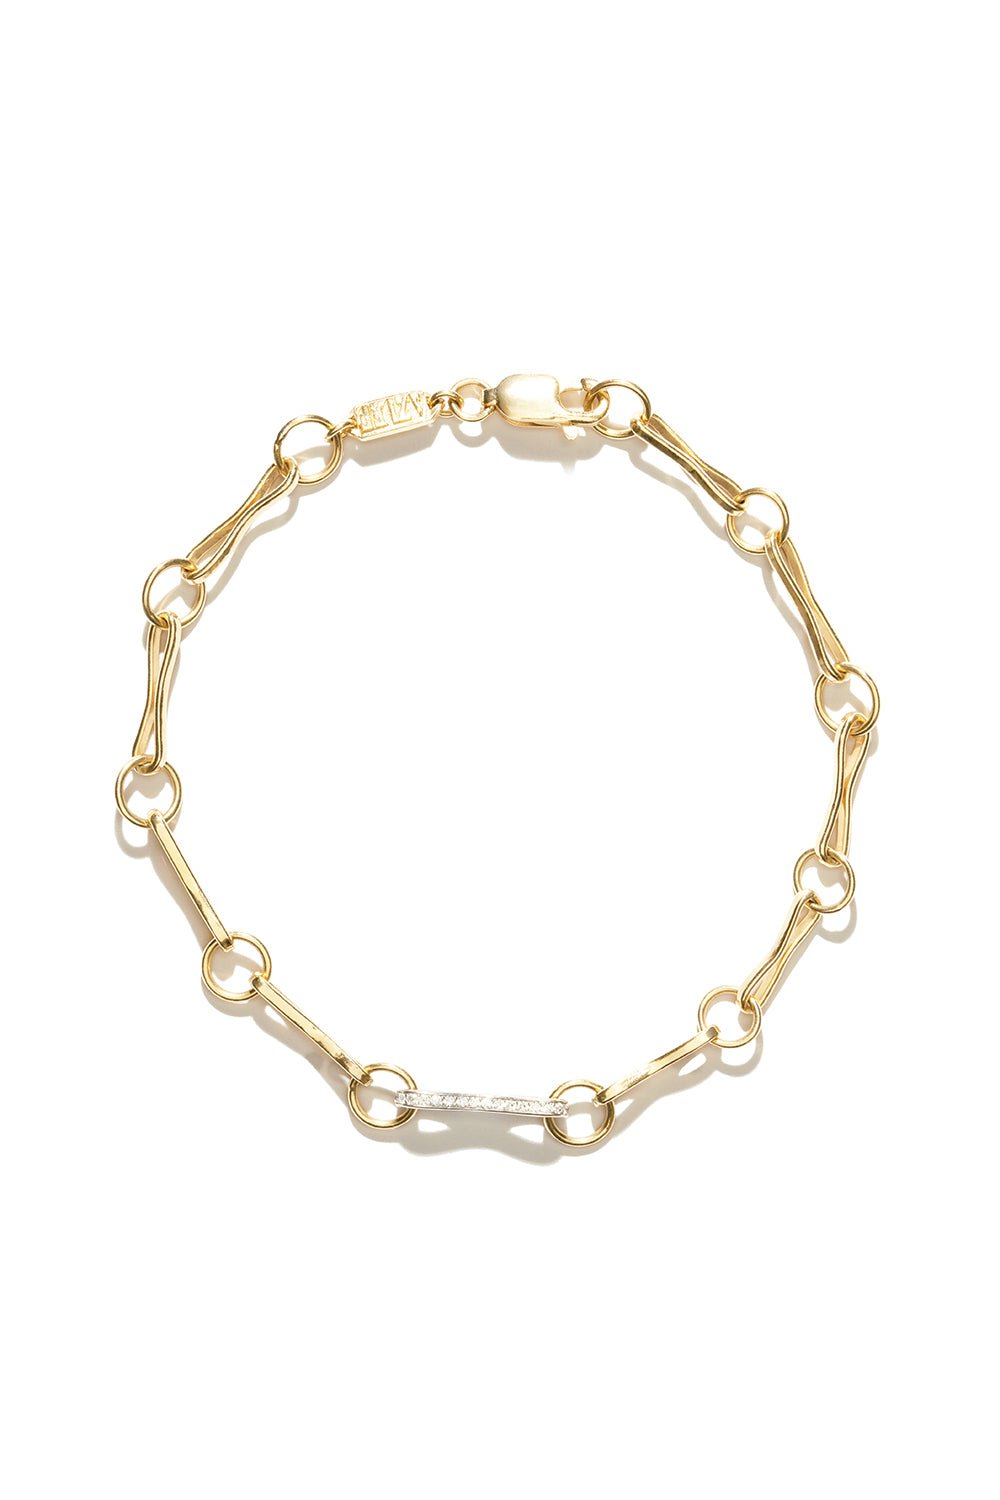 AZLEE-Large Circle Link Bracelet-YELLOW GOLD